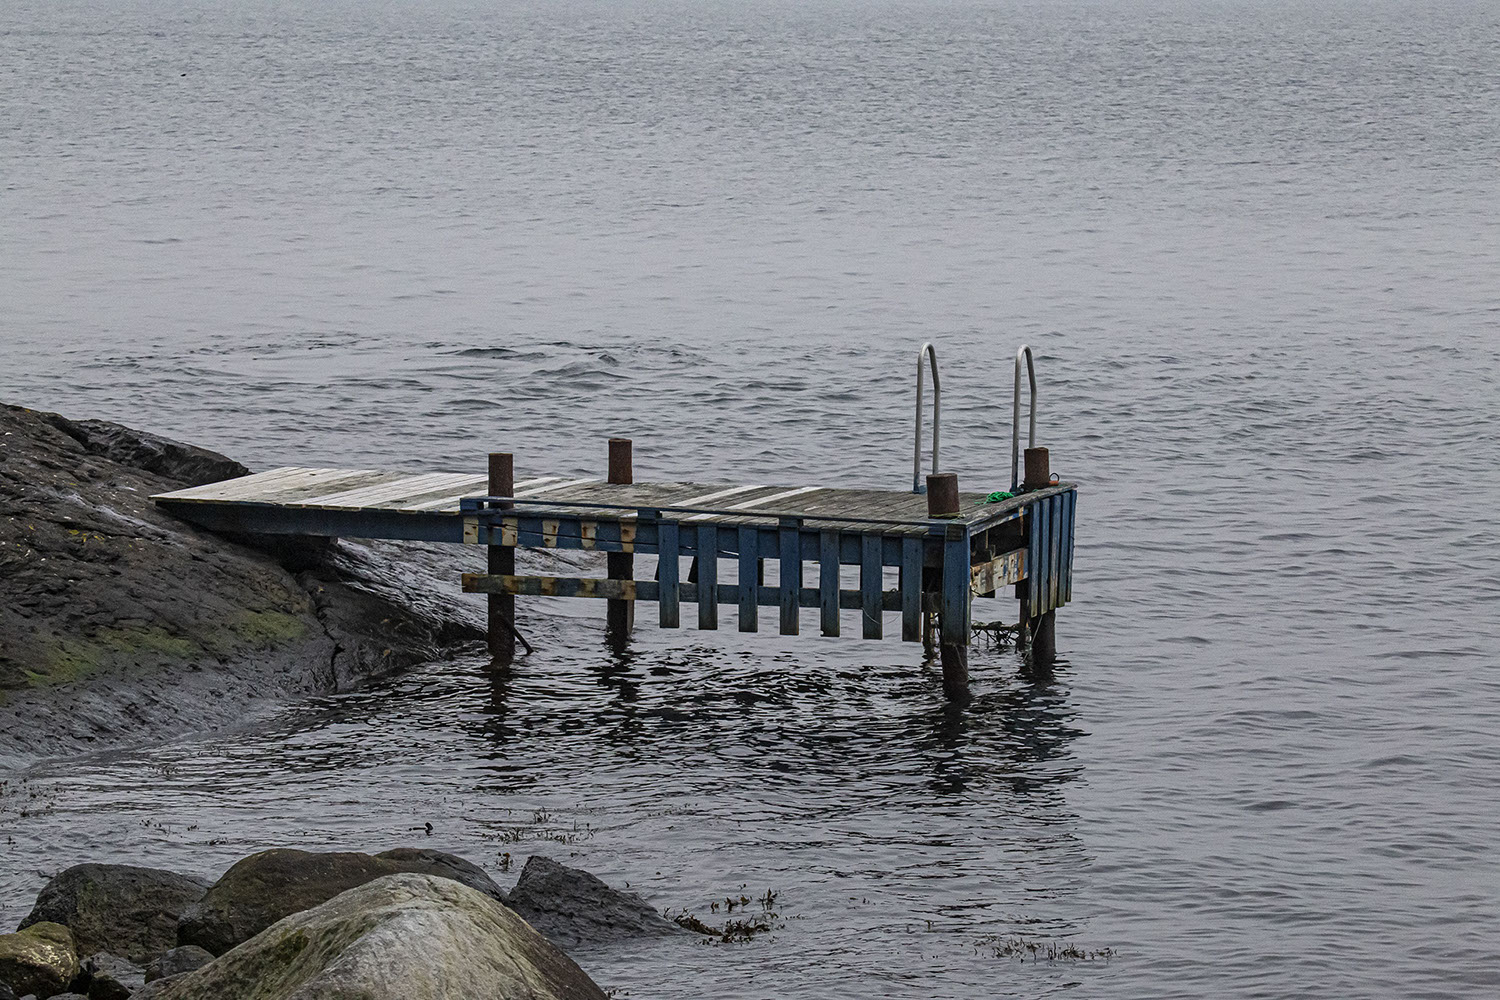 Small landing stage on Fijord near Stavanger.